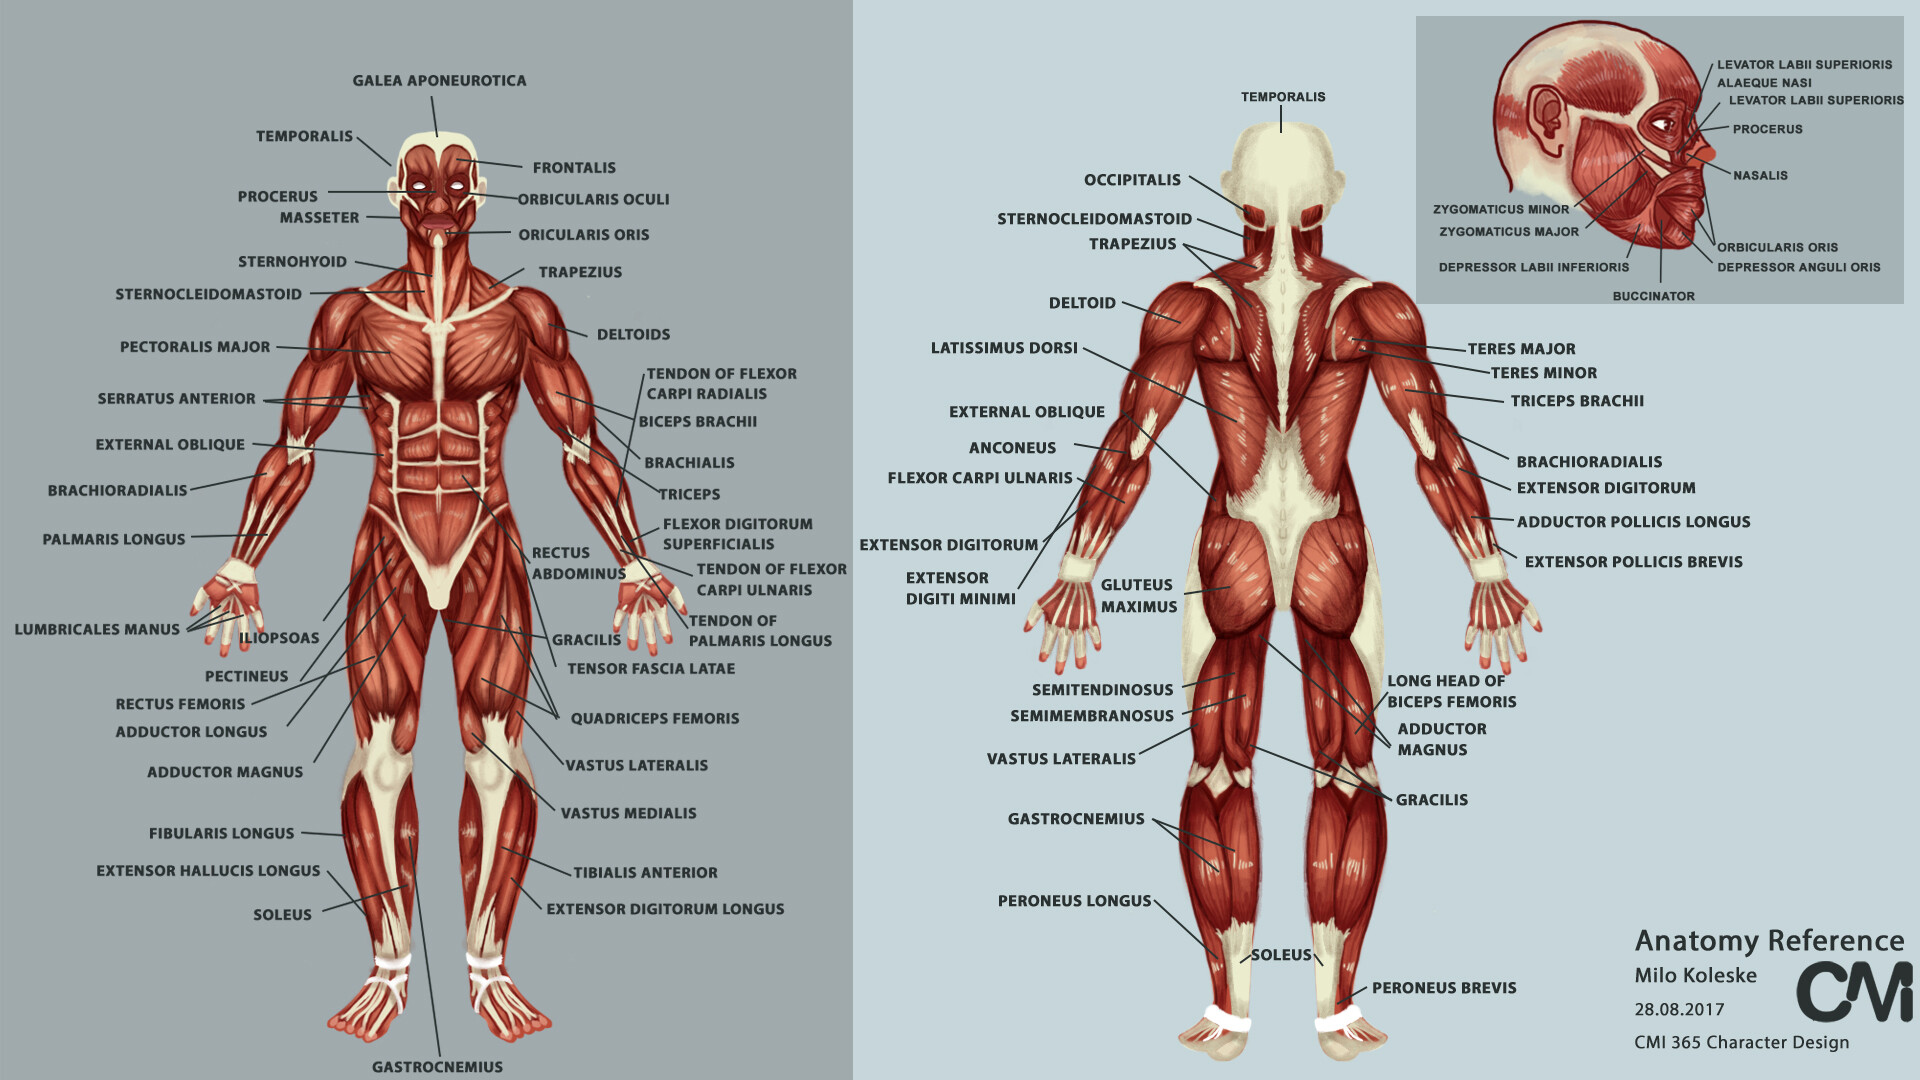 Плакат мышц. Атлас анатомия человека мышечная система. Мышечная система человека схема для массажа. Анатомия мышц человека для массажистов. Мышцы туловища человека анатомия атлас.